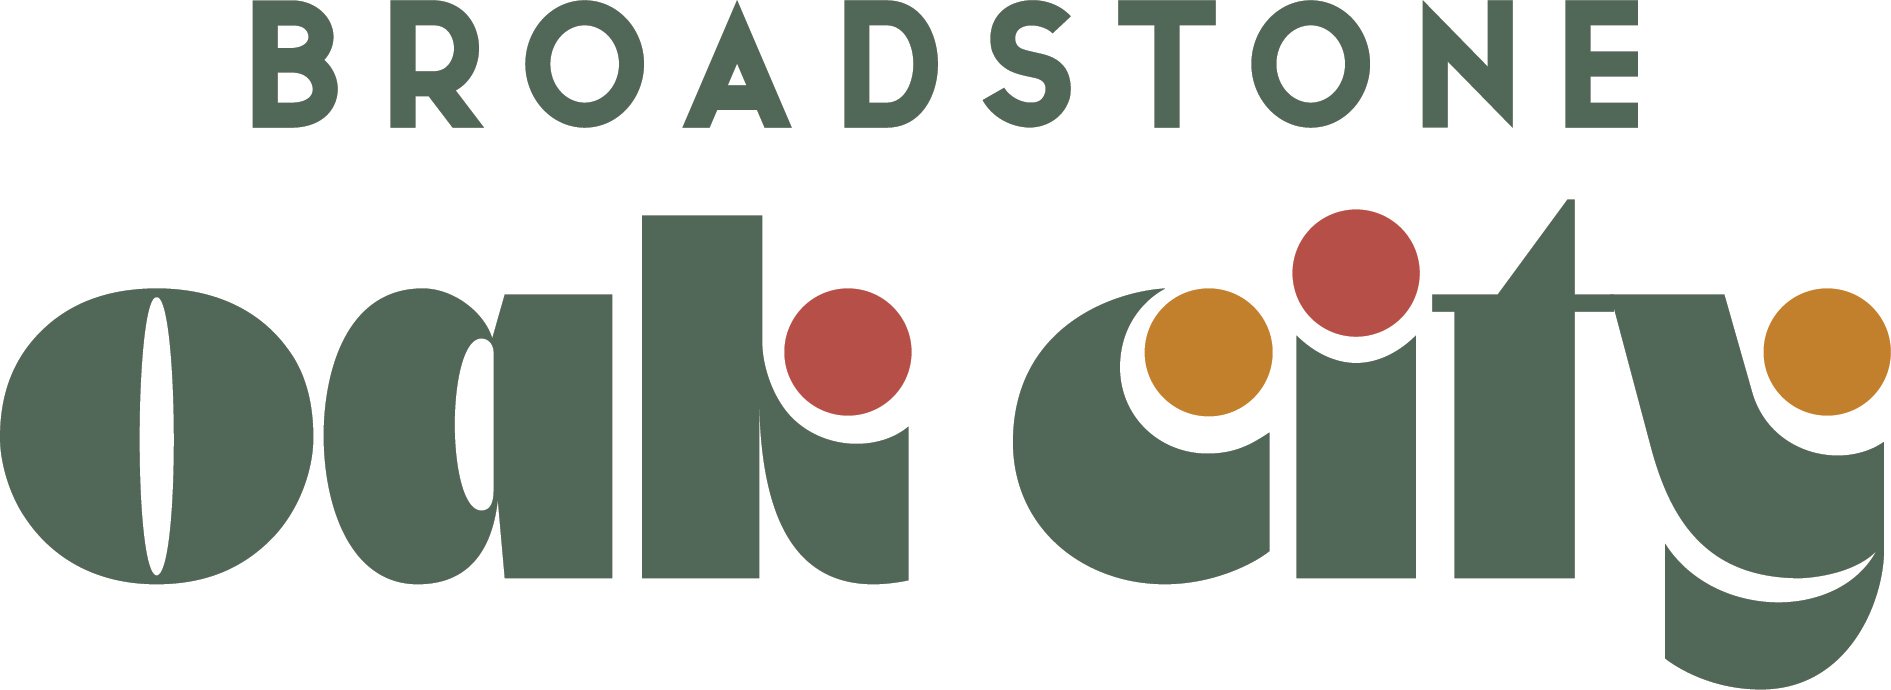 Broadstone-OakCity_logo_Sec_Opt-A.jpg